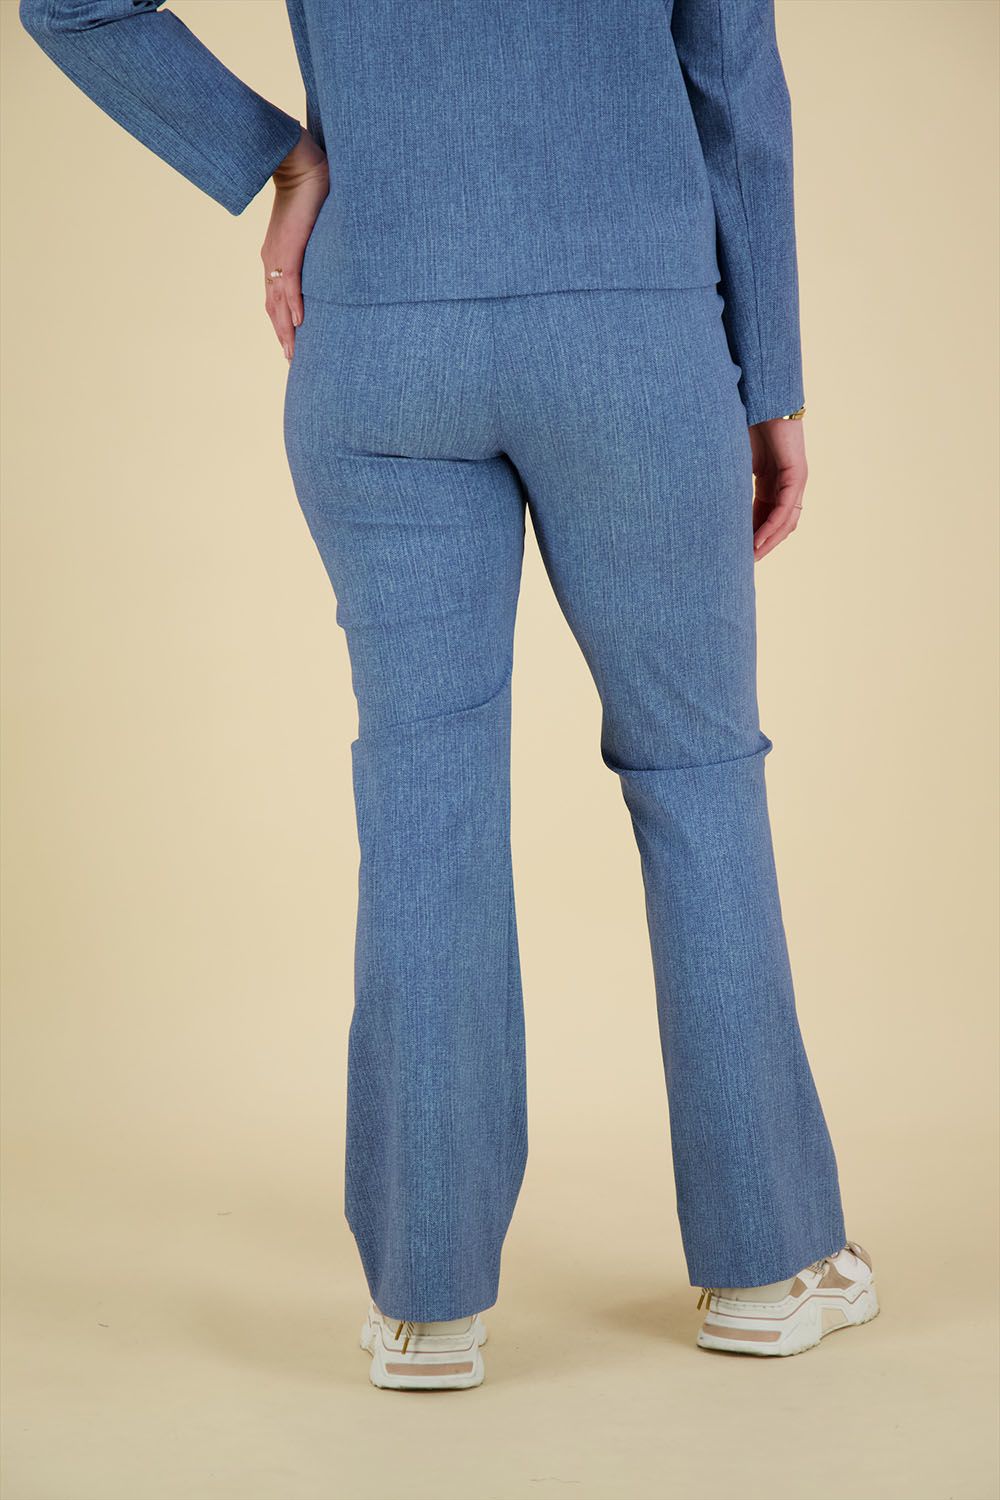 Studio Anneloes Broek Flair Jeans Blauw